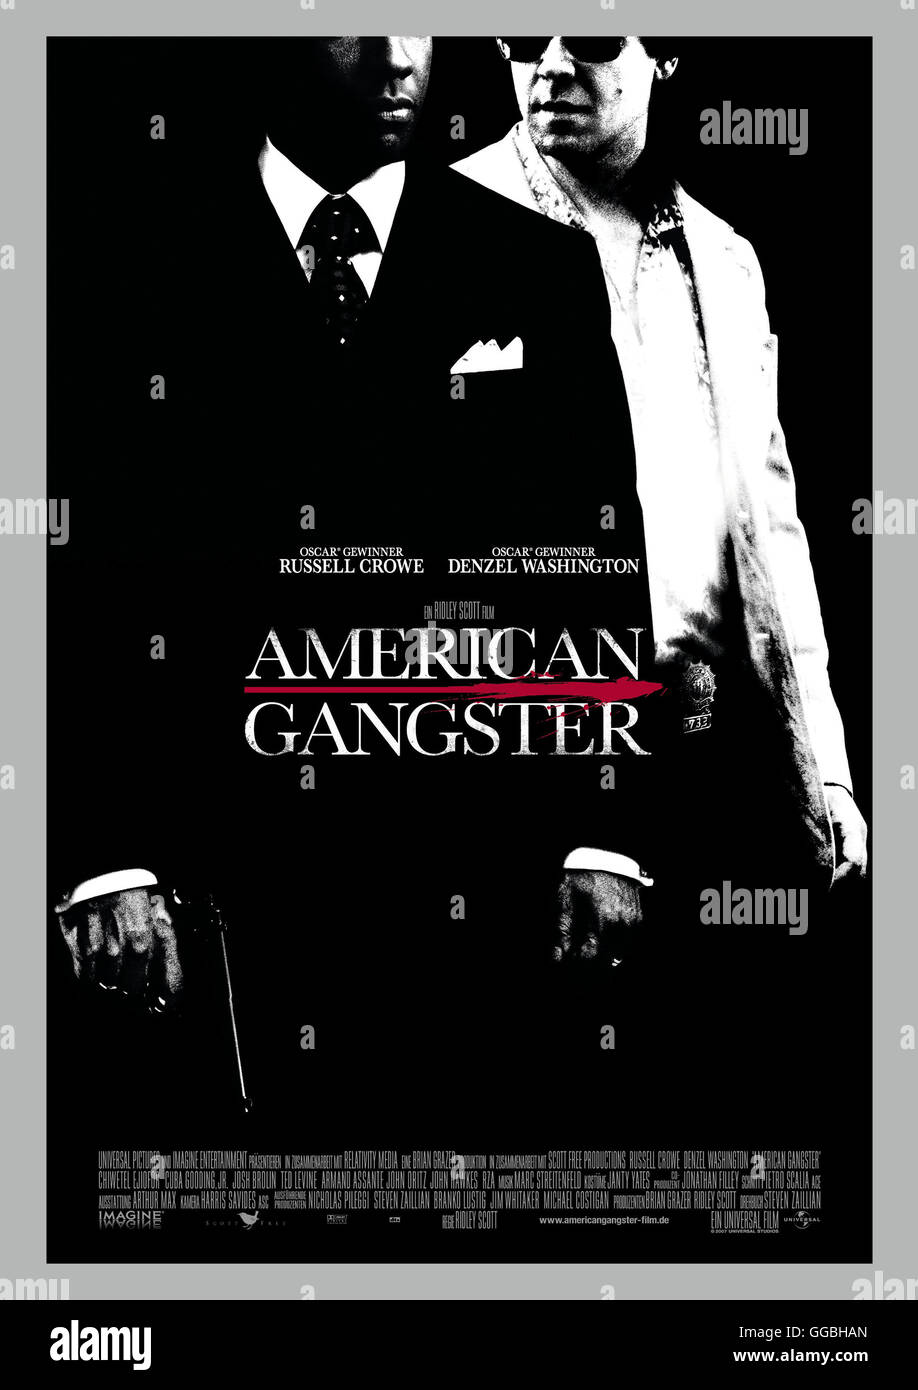 American Gangster / Filmplakat Regie: Ridley Scott aka. American Gangster Stock Photo